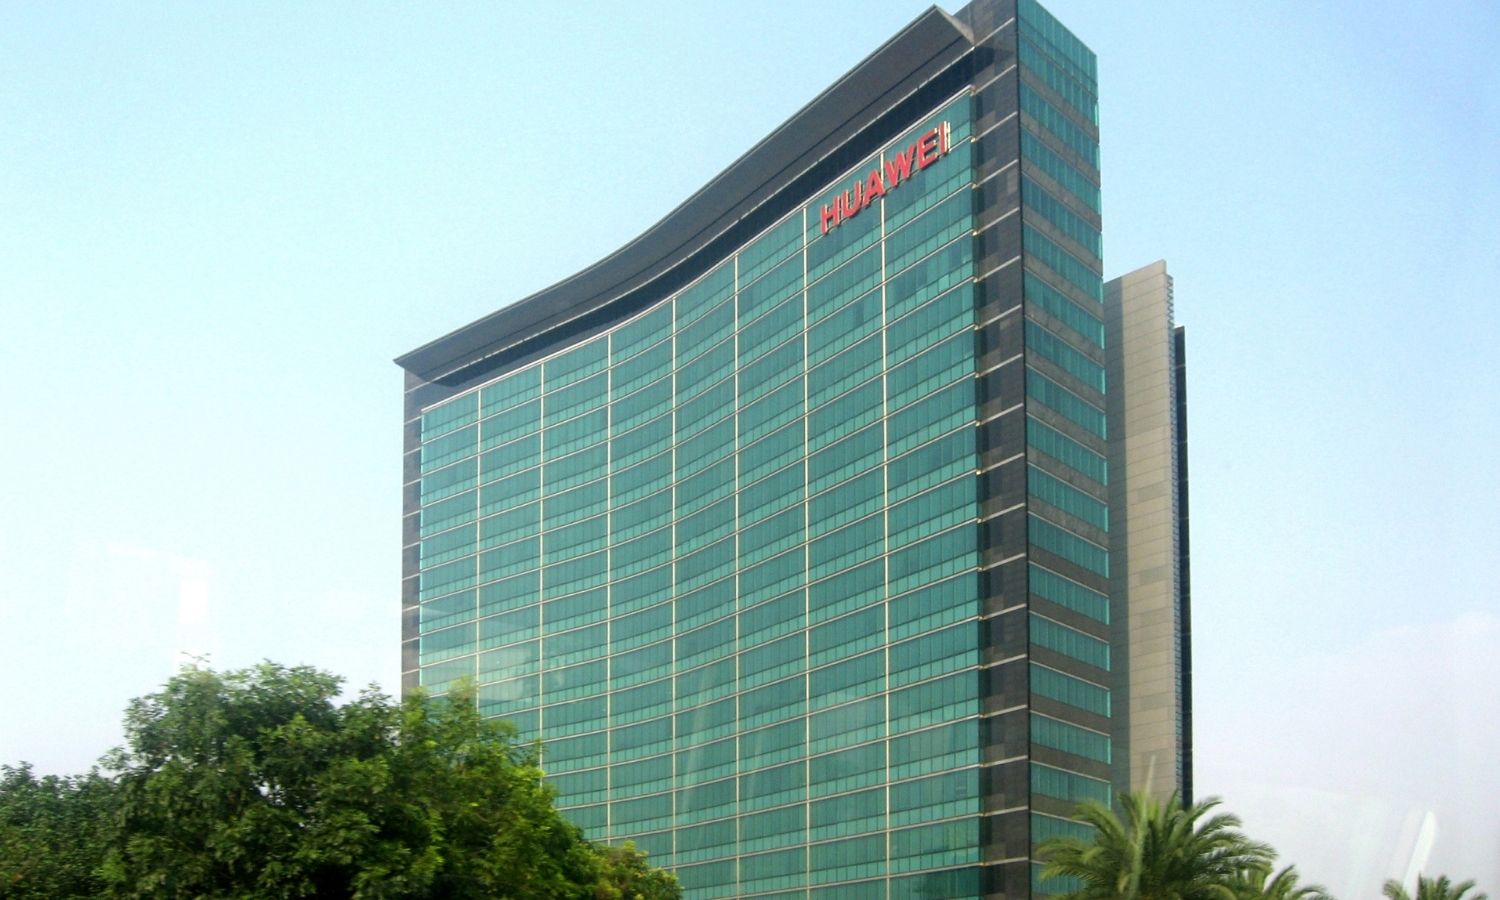 OTD in 1987: Red Zhengfei founded Huawei Technologies Co.